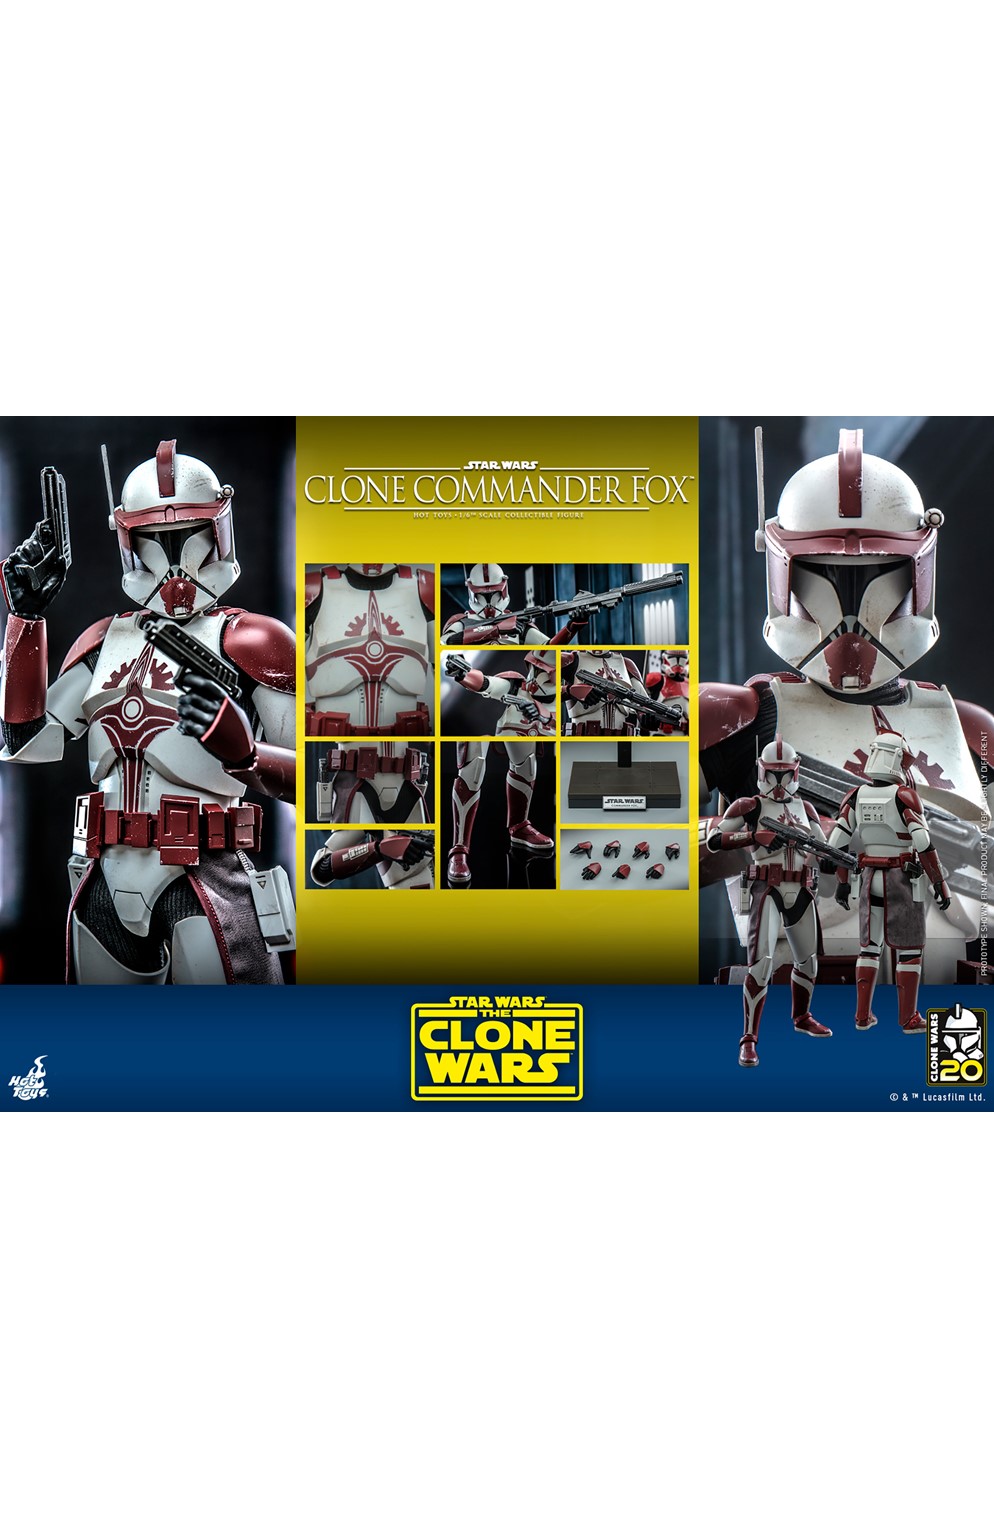 Clone Commander Fox Star Wars Sixth Scale Figure